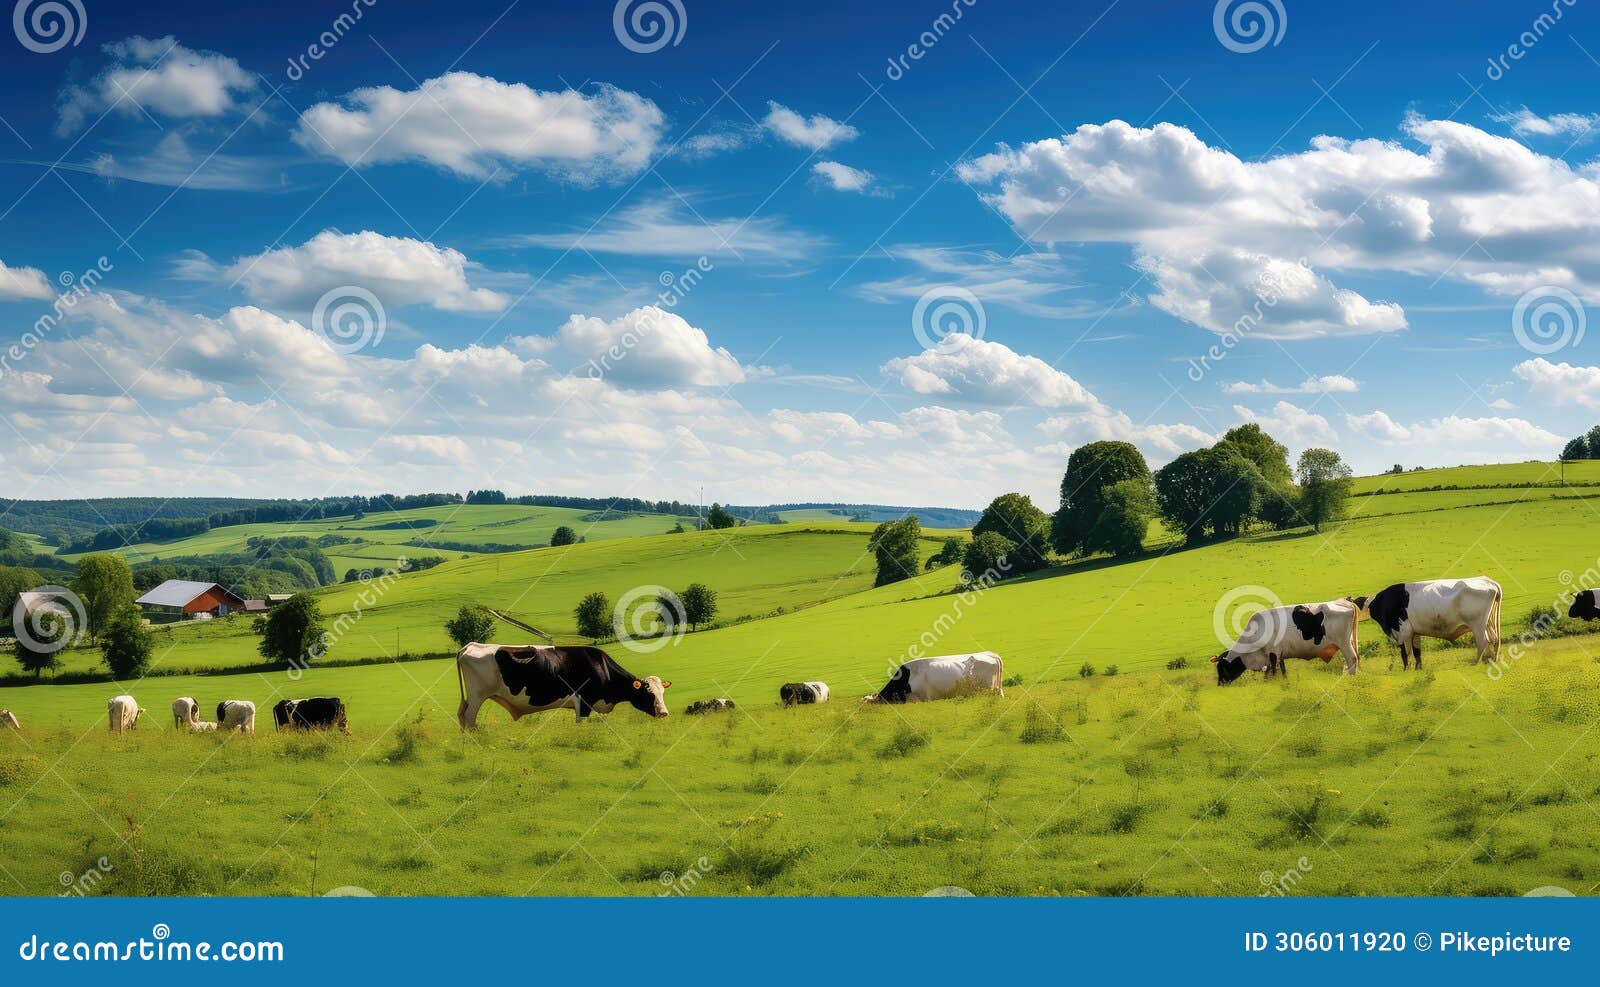 bovine horses cows